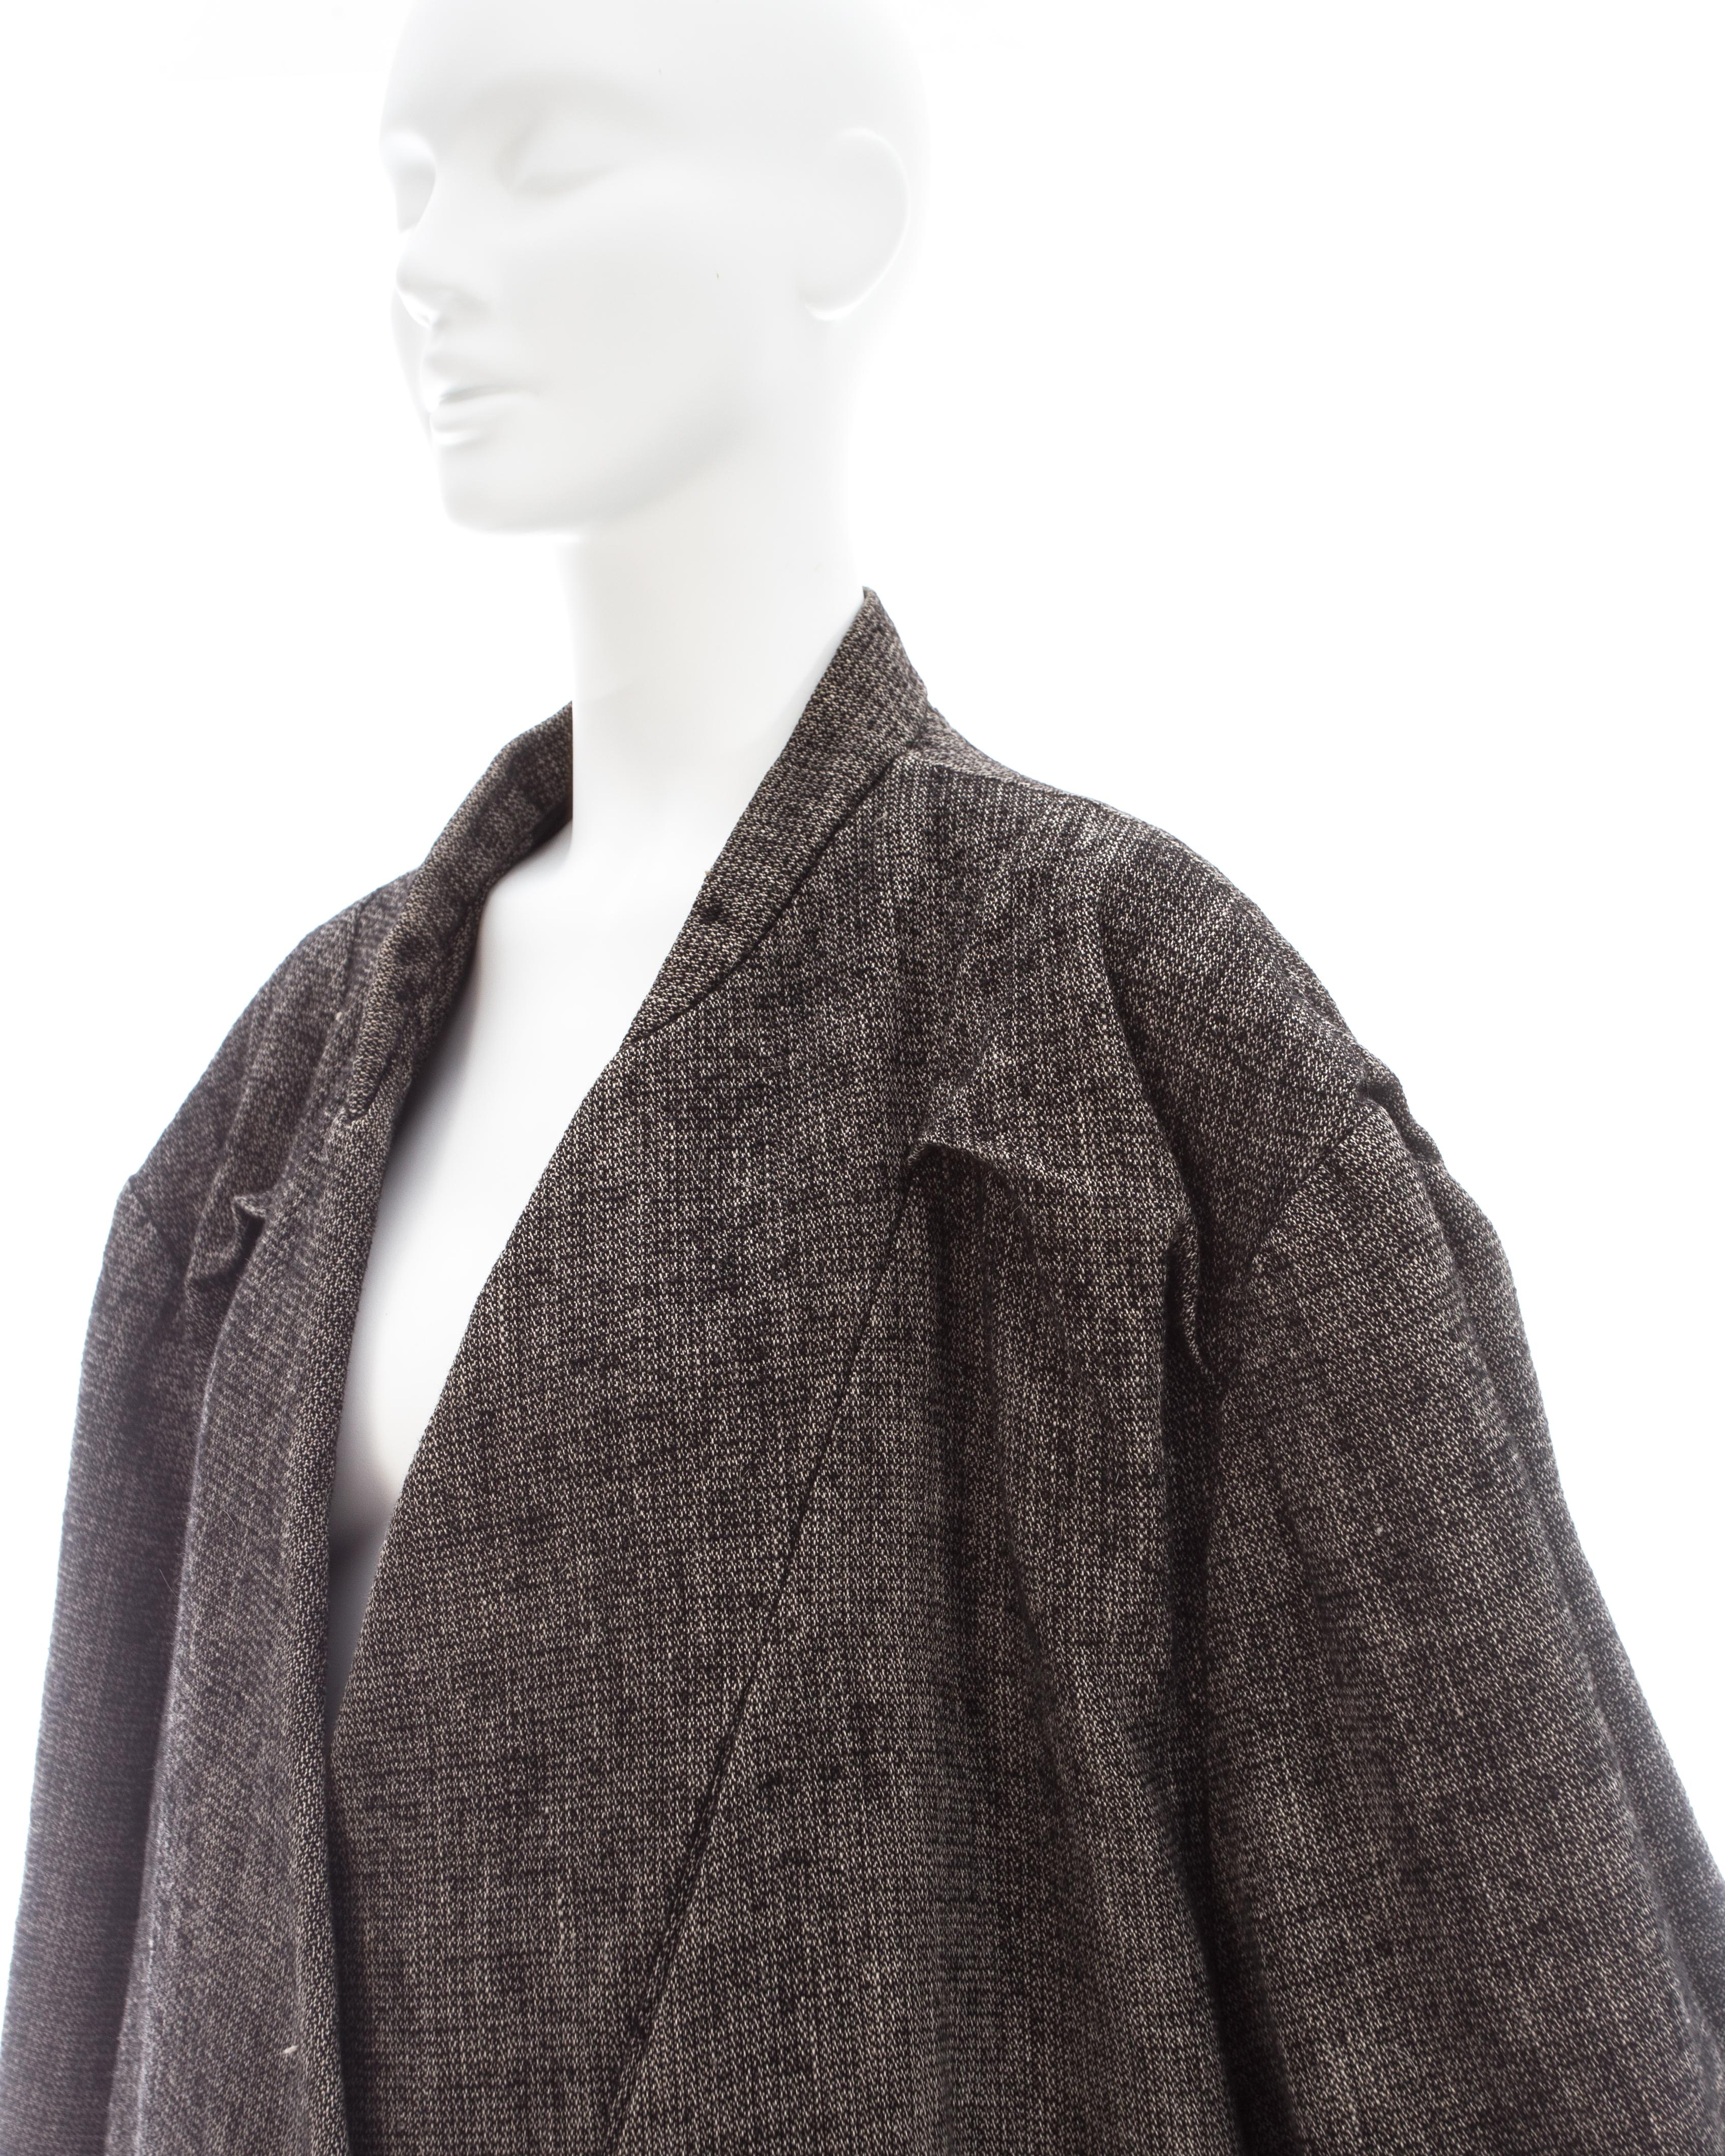 Women's Martin Margiela grey wool and linen XXL size 78 double inside coat, fw 2000